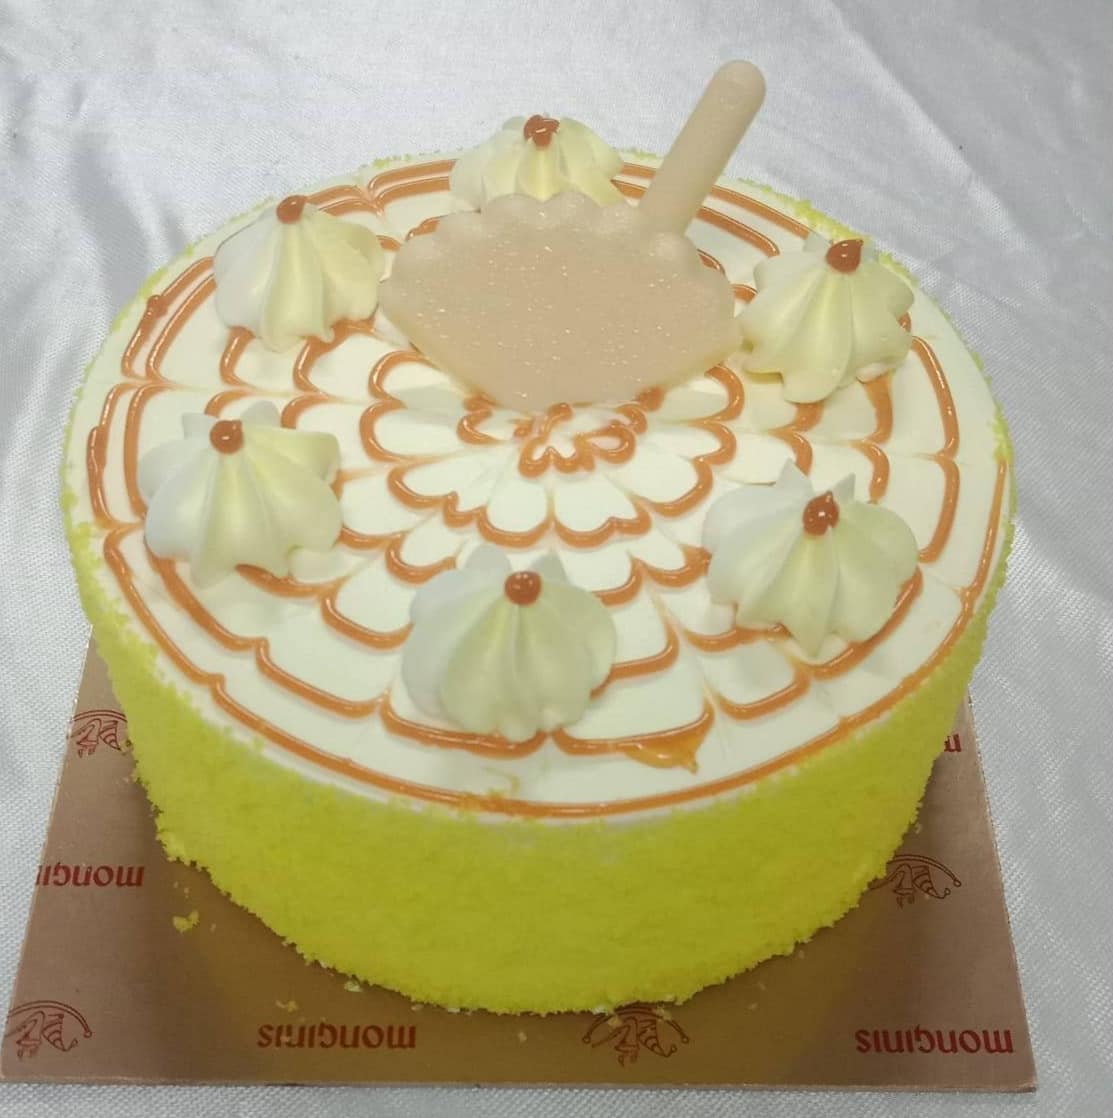 TODA... - Monginis Cake Shop-Sandhya Confectioners-Thakurpukur | Facebook